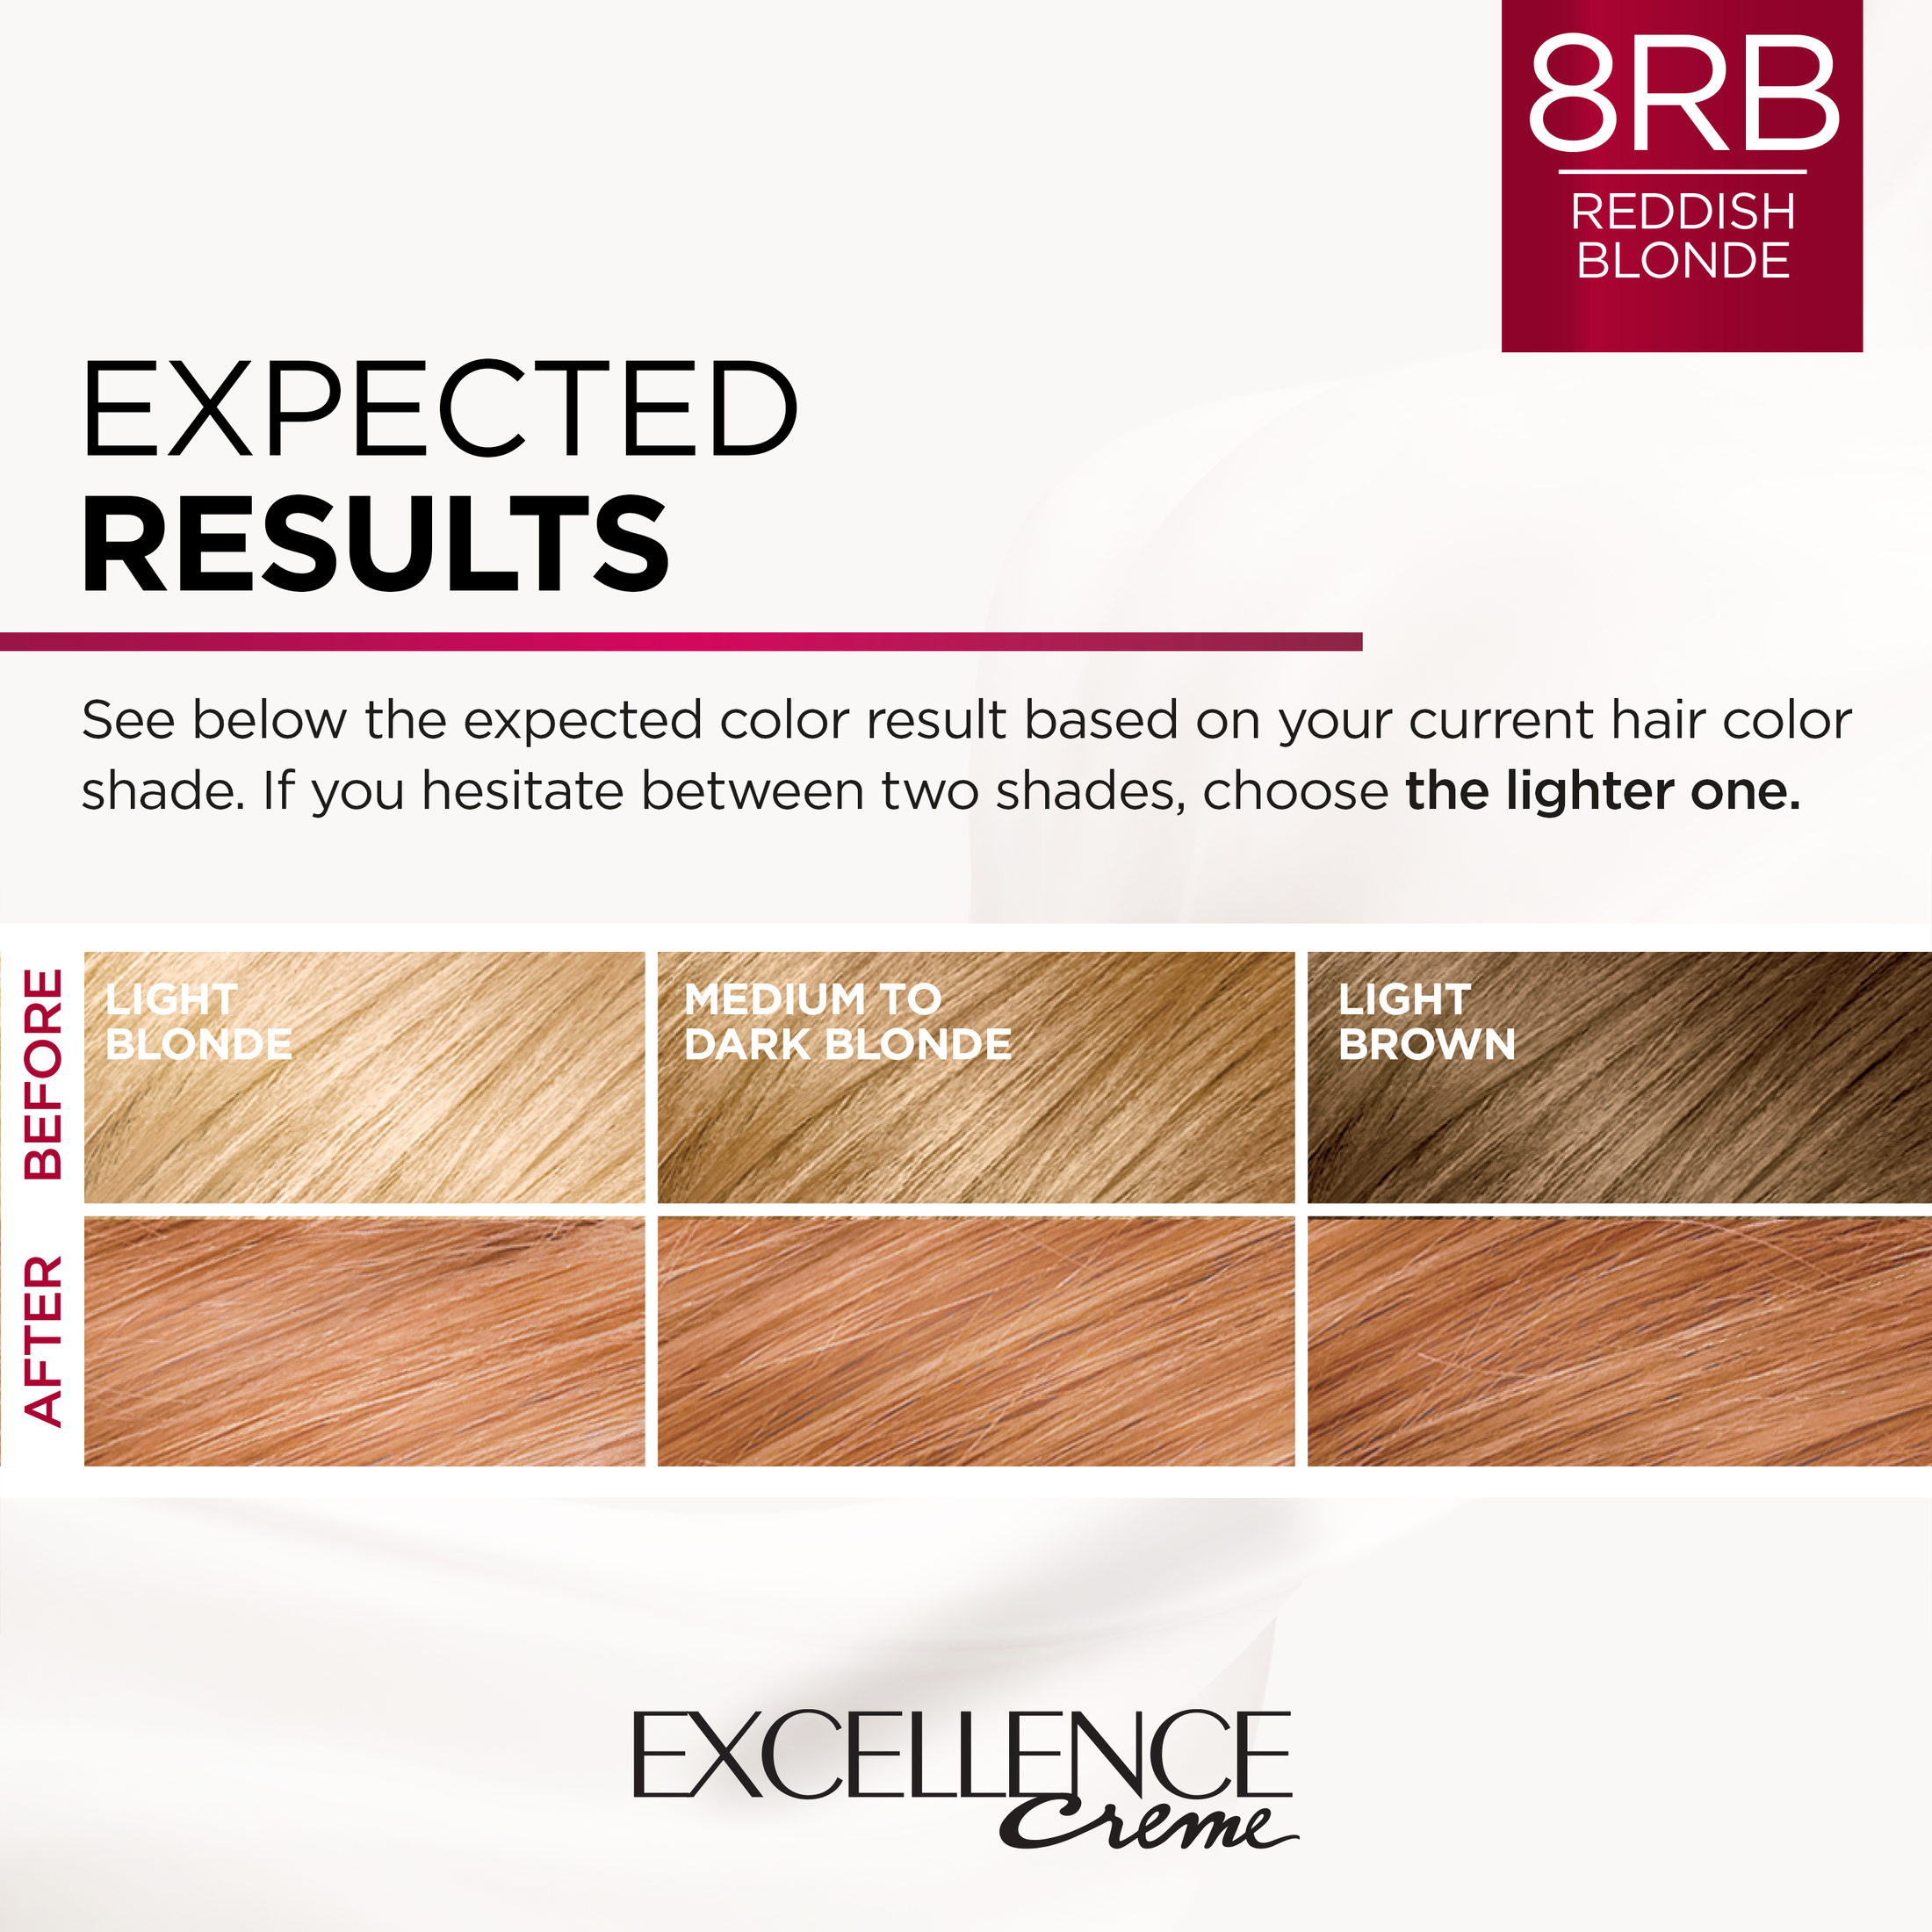 L'Oreal Paris Excellence Creme Permanent Hair Color, 8RB Medium Reddish Blonde - image 5 of 8